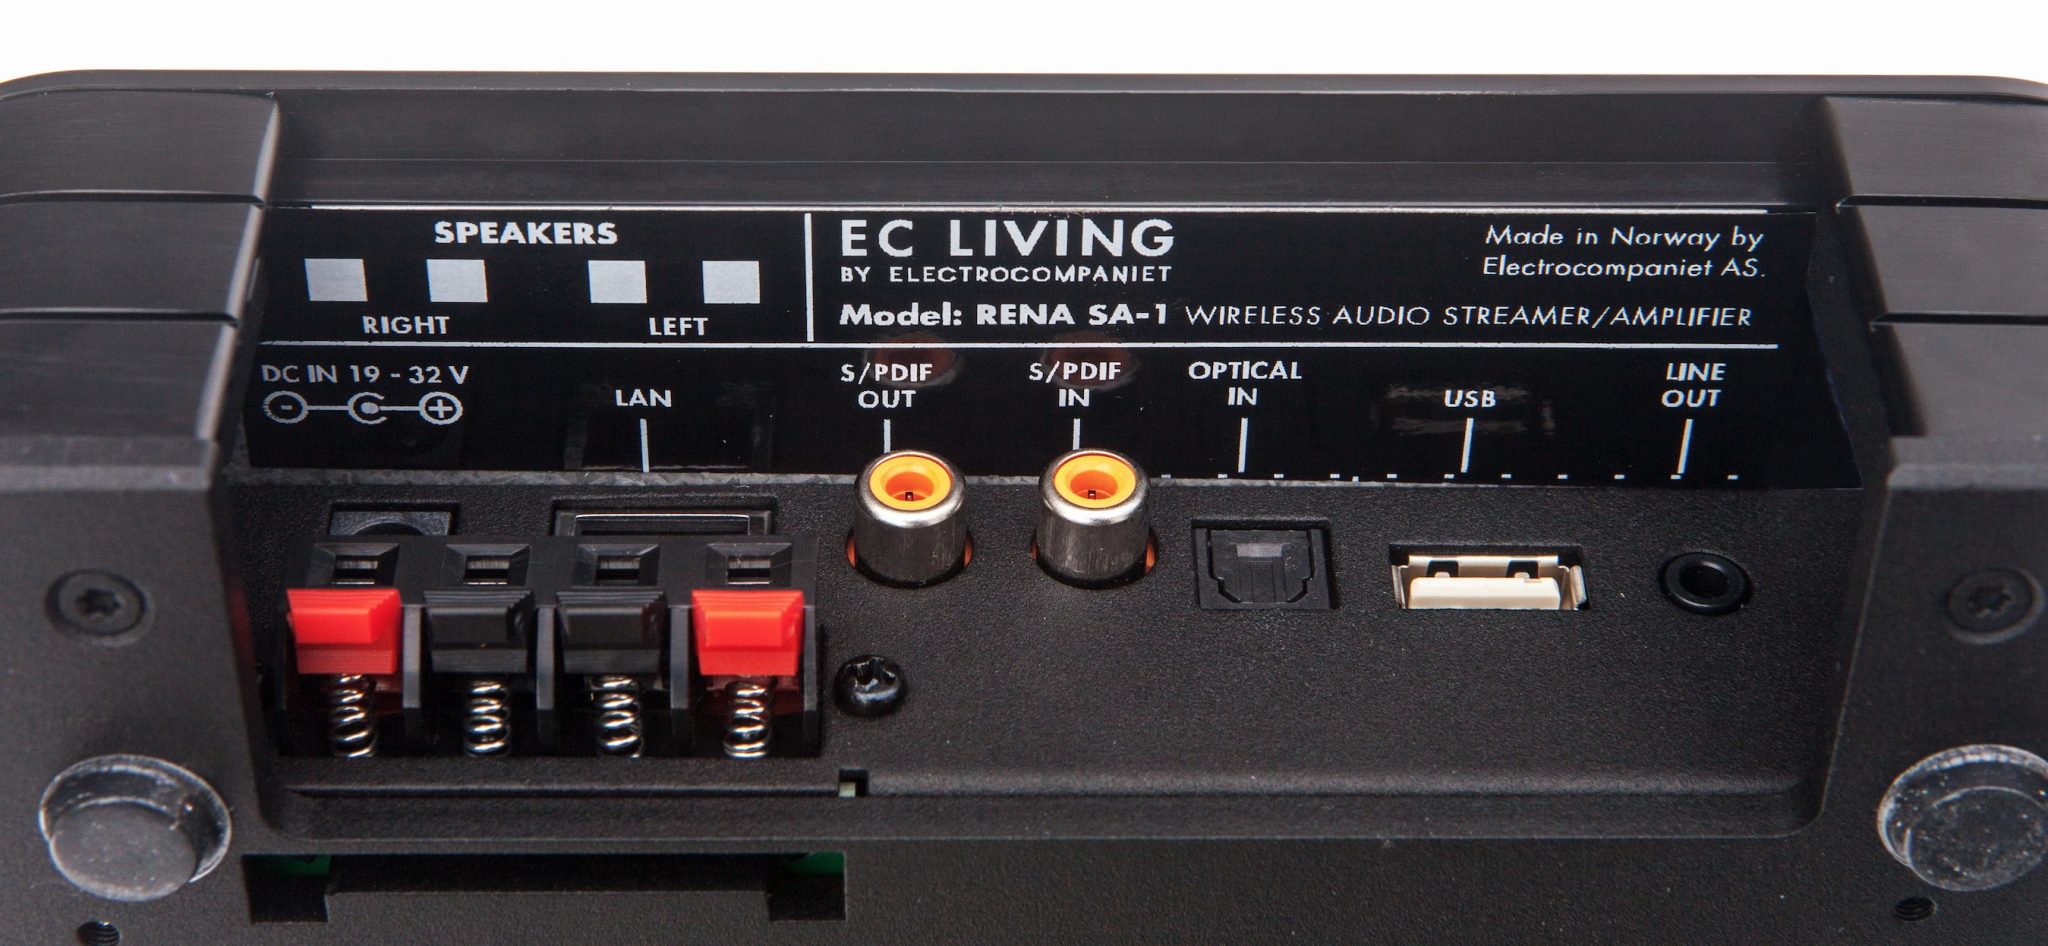 Rena SA-1 Wireless Audio Streamer From Electrocompaniet